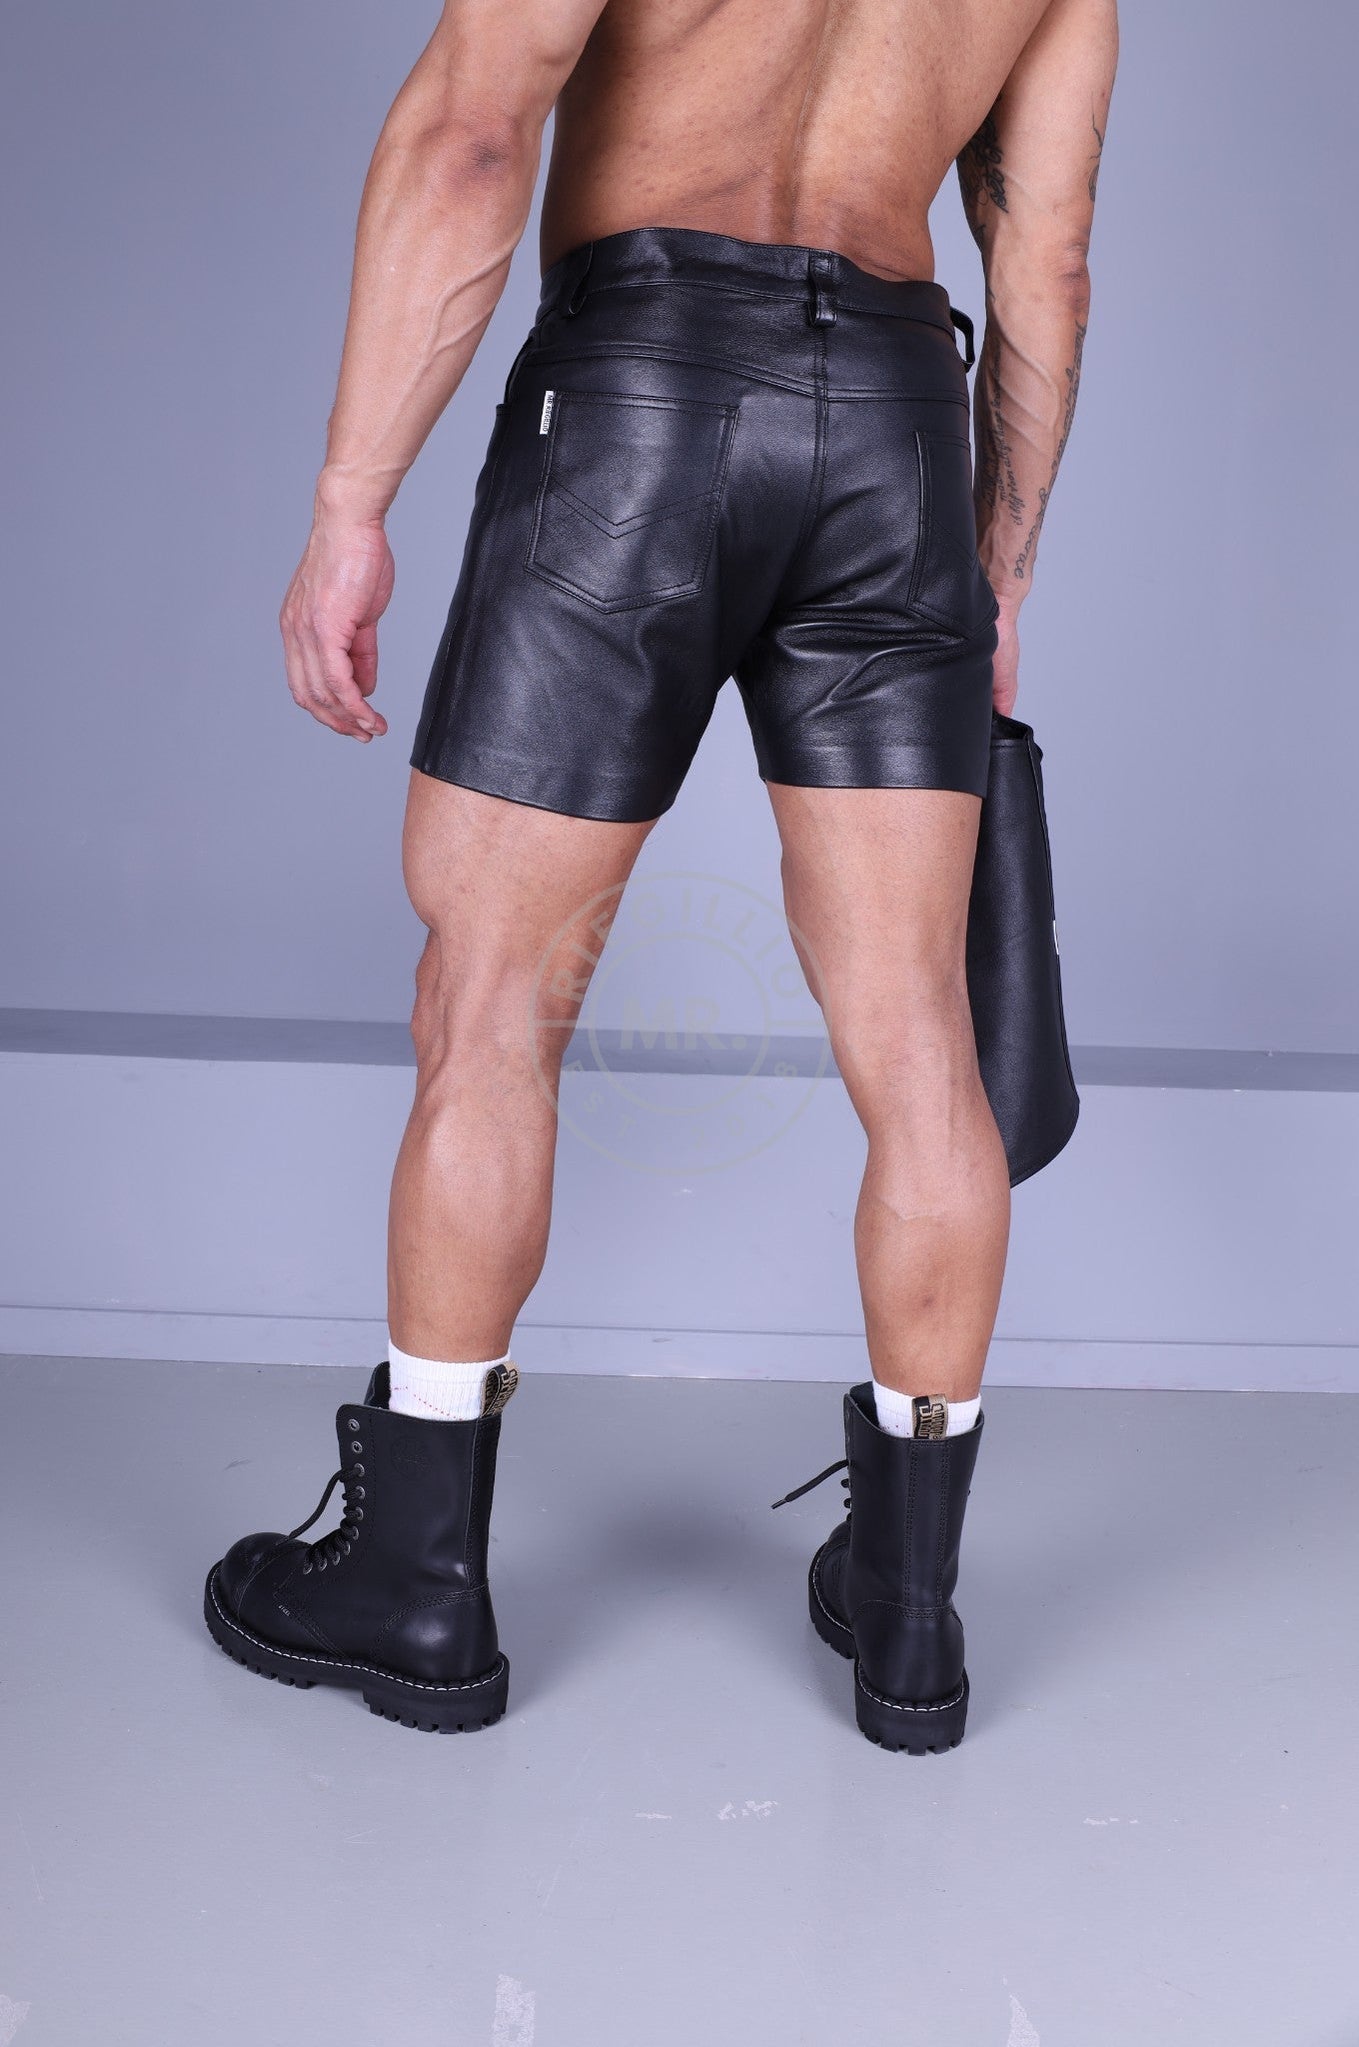 Black Leather 5 Pocket Short at MR. Riegillio